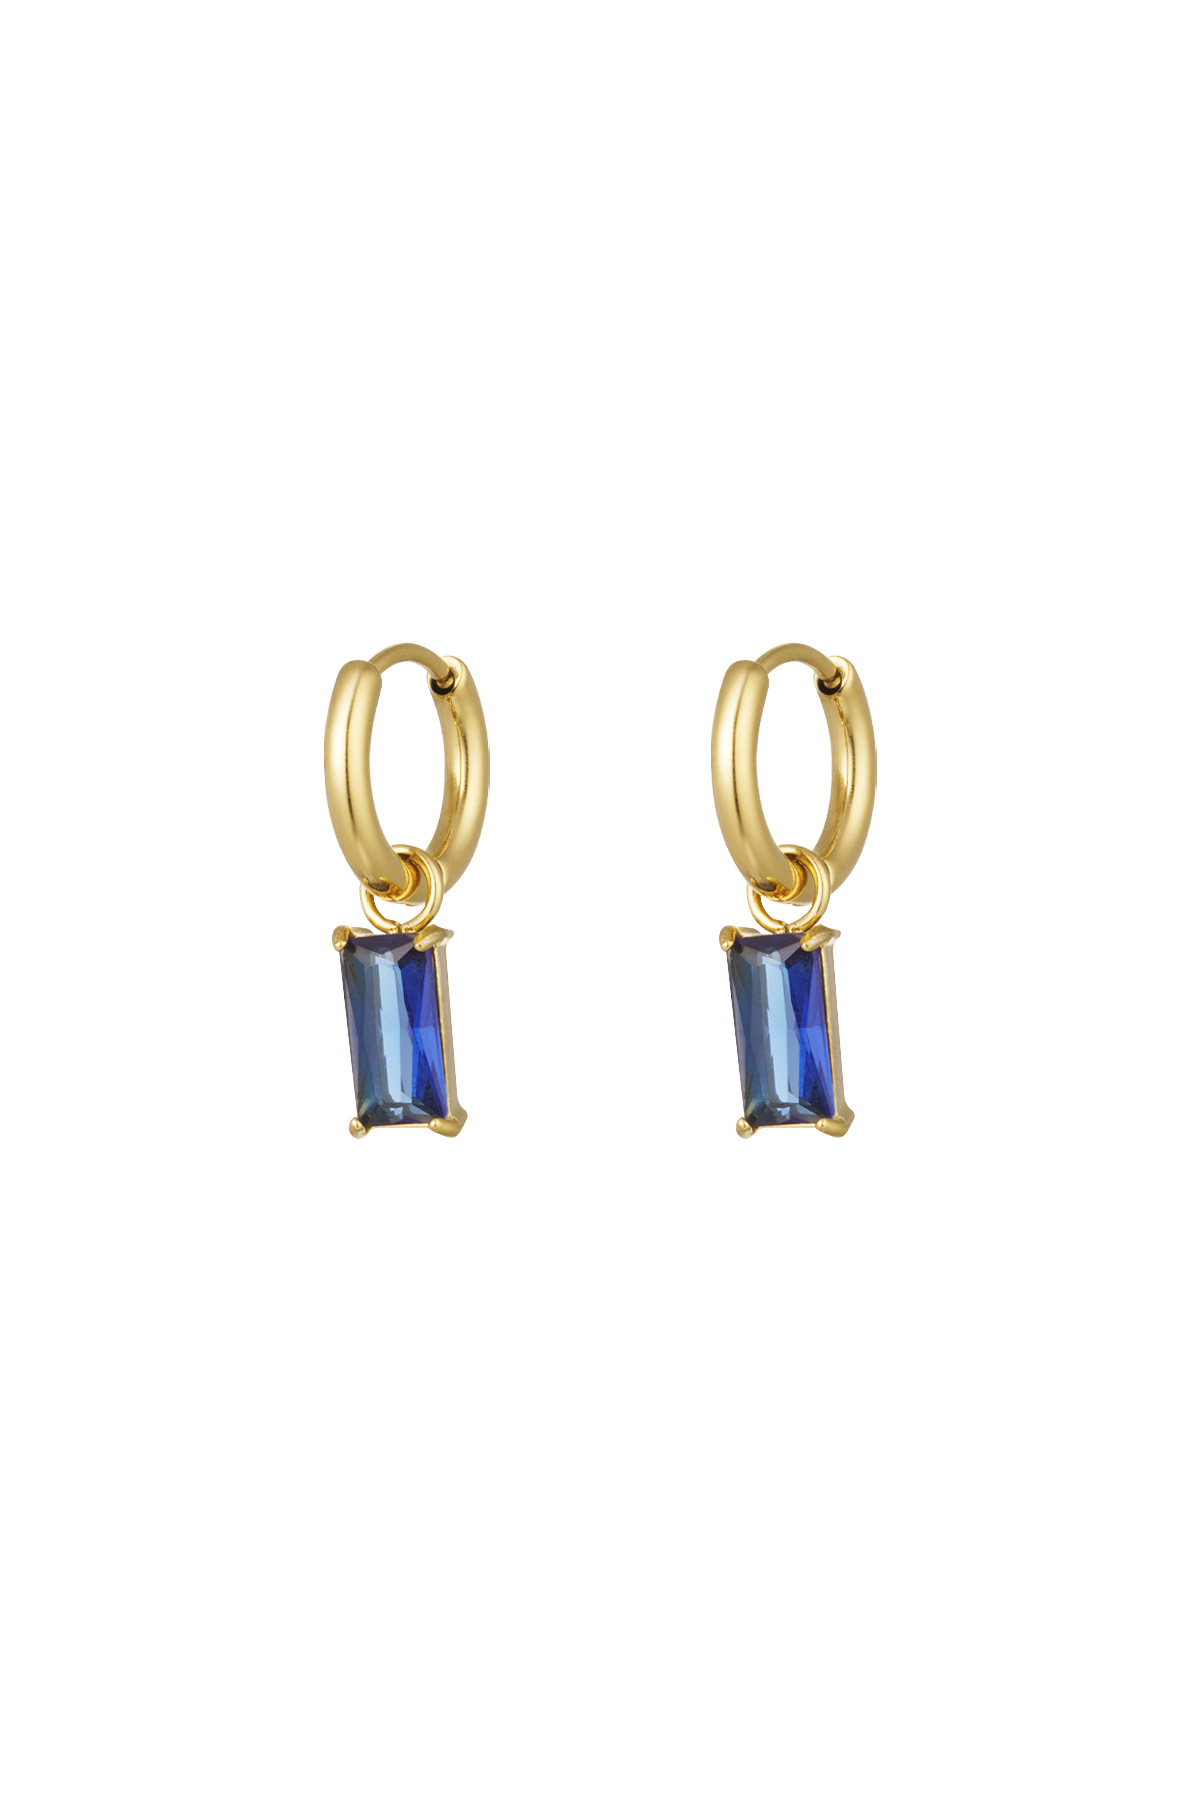 Earrings elongated stone - gold/blue h5 